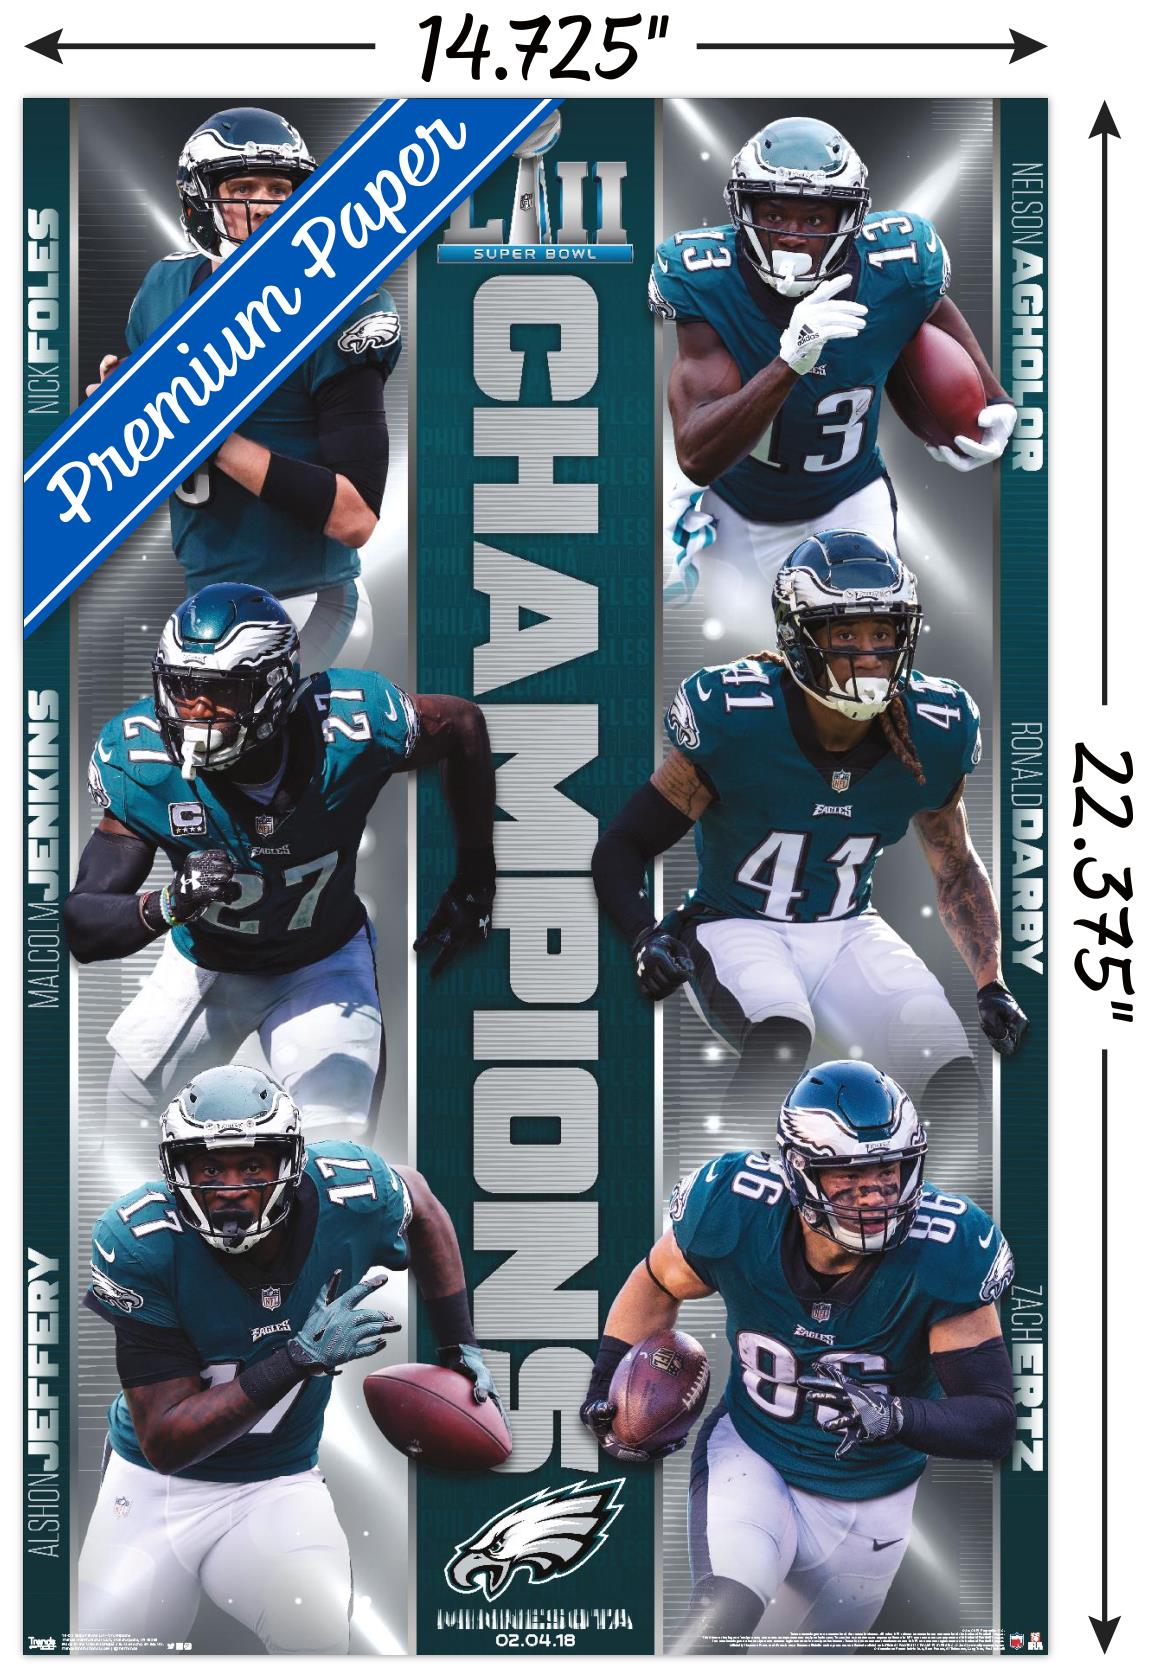 Trends International NFL Philadelphia Eagles - Commemorative Super Bowl LII - Champions Wall Poster 14.725" x 22.375" Premium Poster & Mount Bundle - image 3 of 5